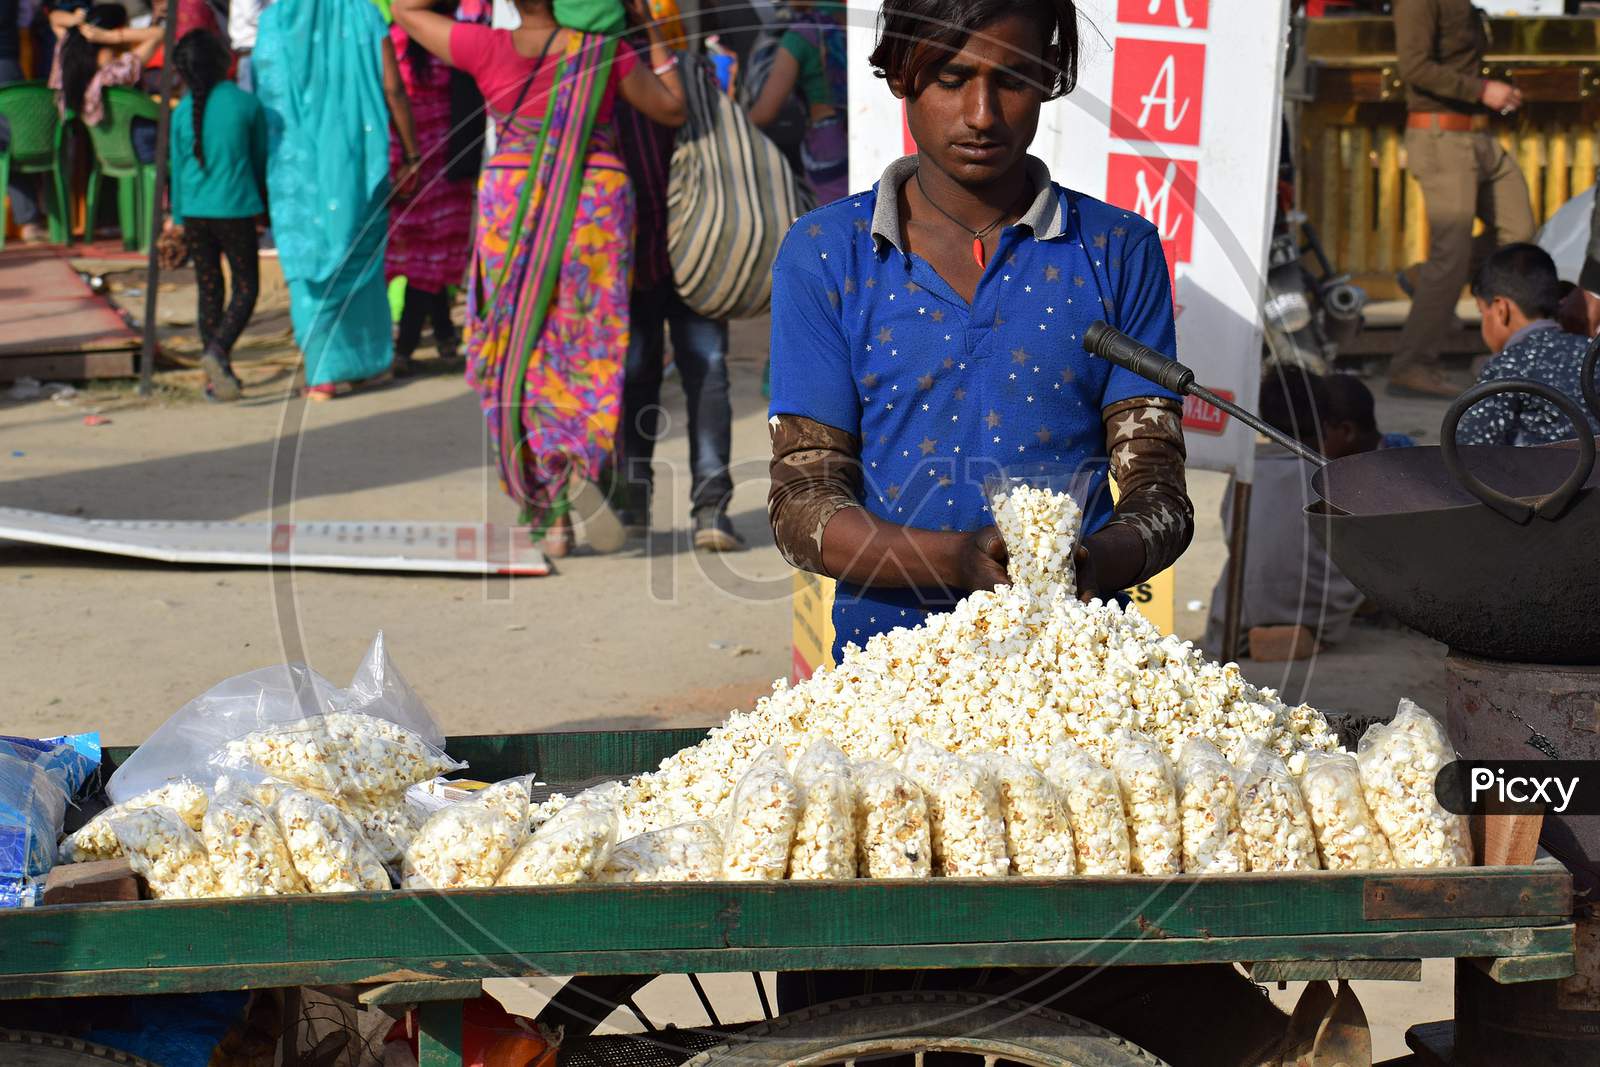 India Pop corn selling Vendor